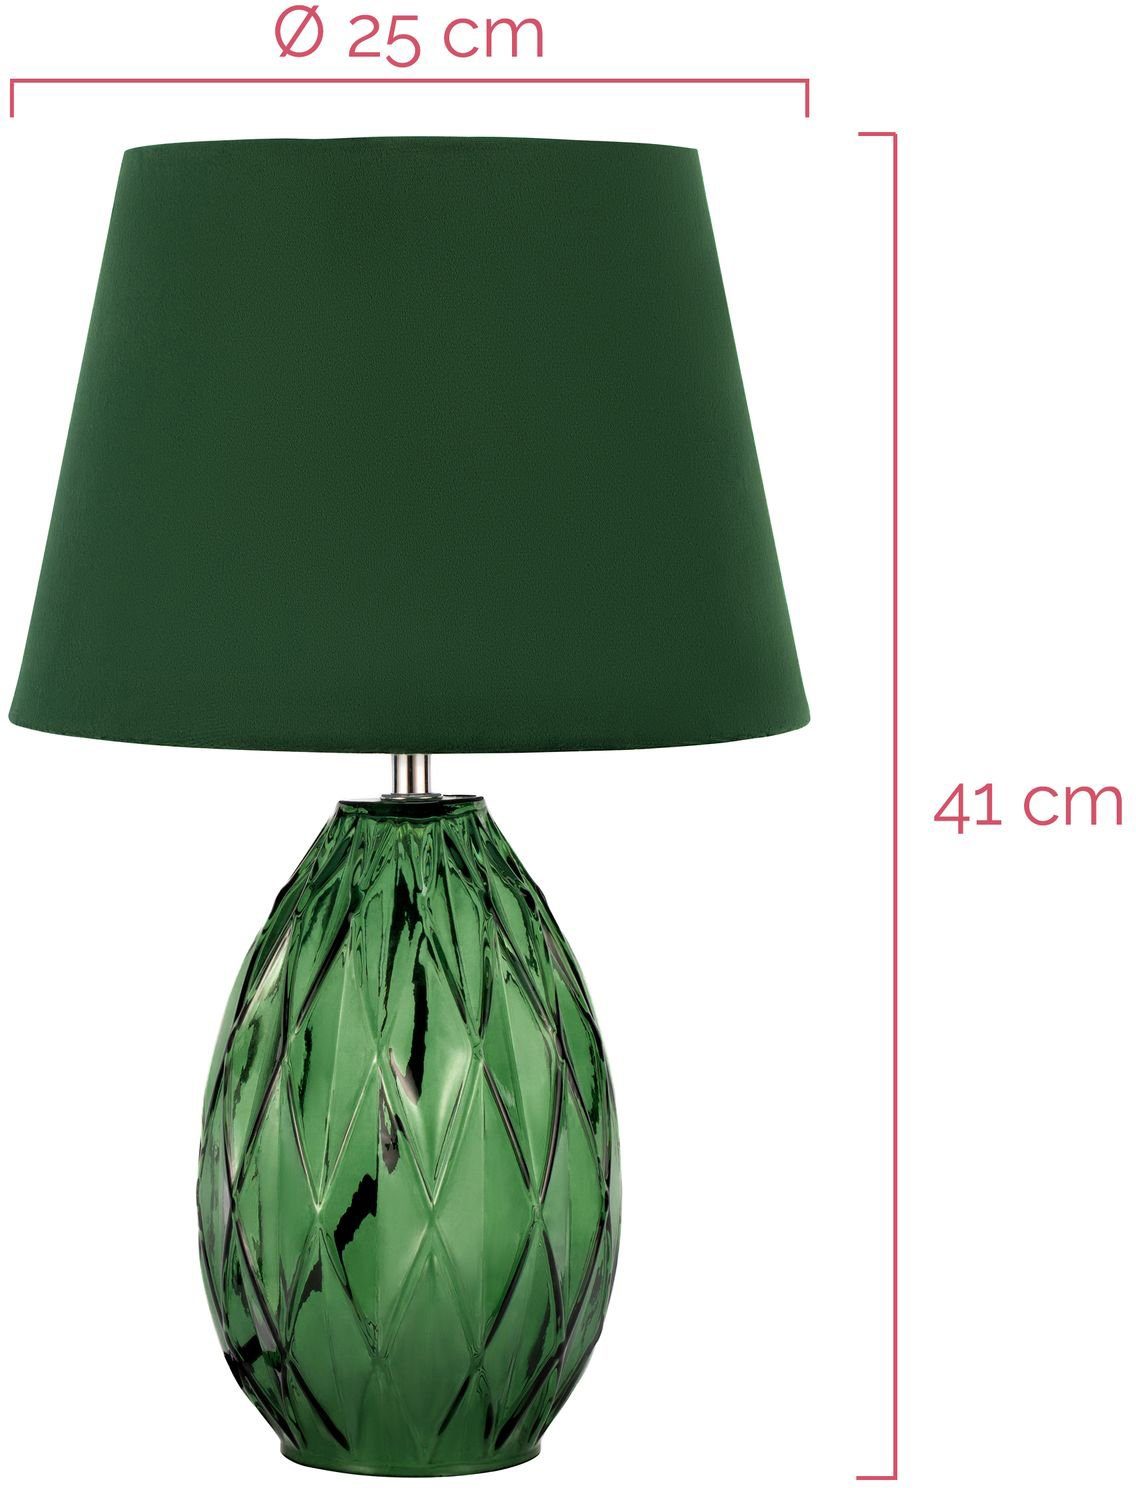 Tischleuchte Grün, 230V, max40W Leuchtmittel, Pauleen Crystal Velvet ohne Glas, E14, Samt